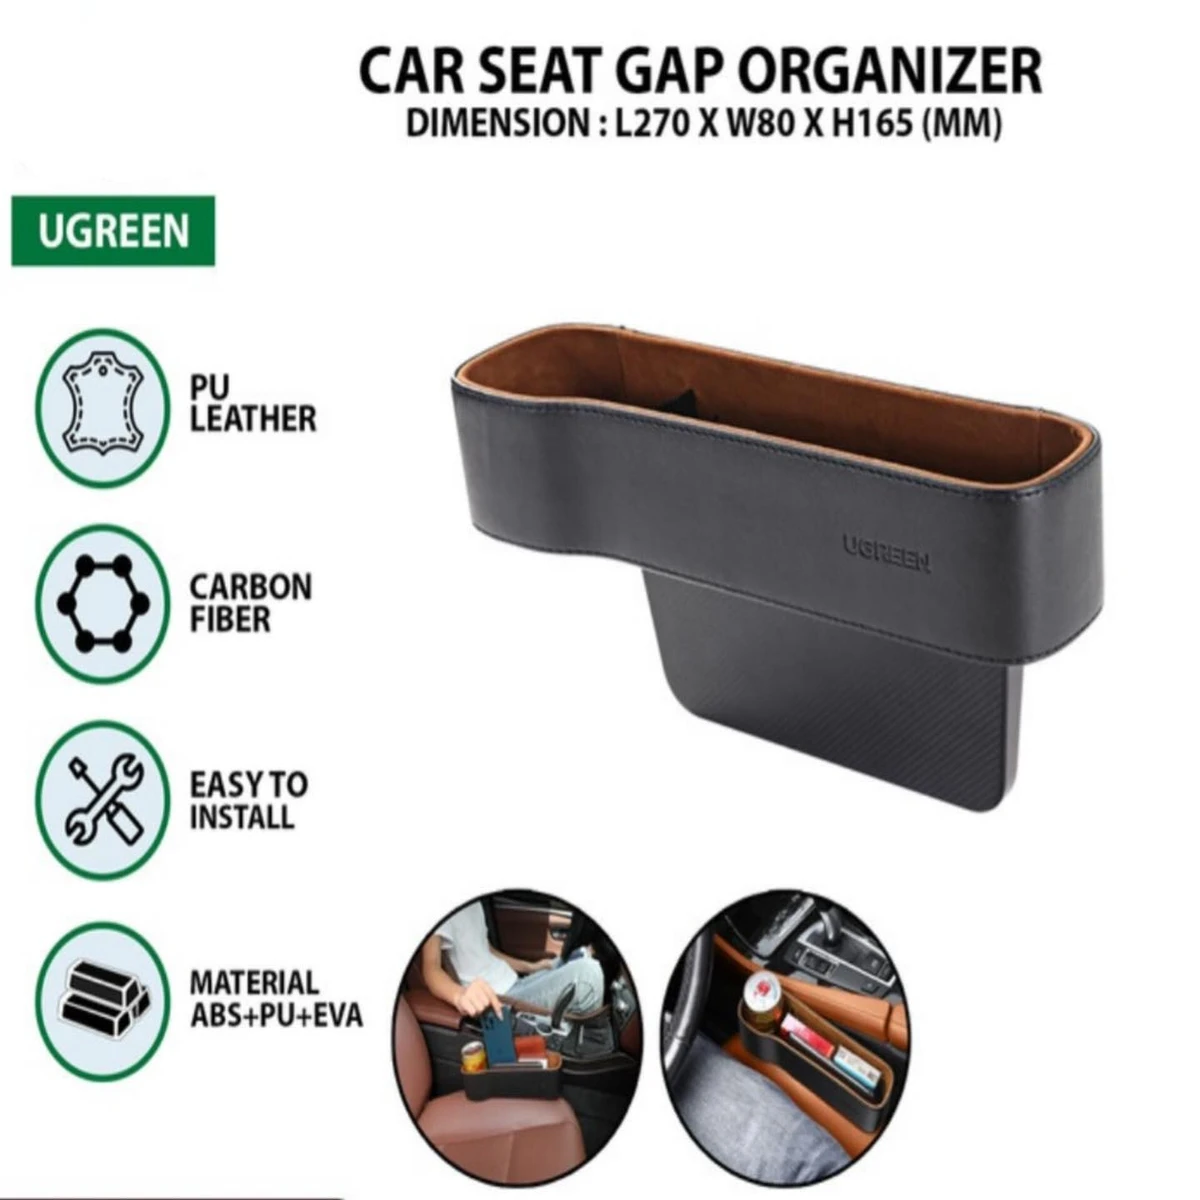 Ugreen car seat gap organiser